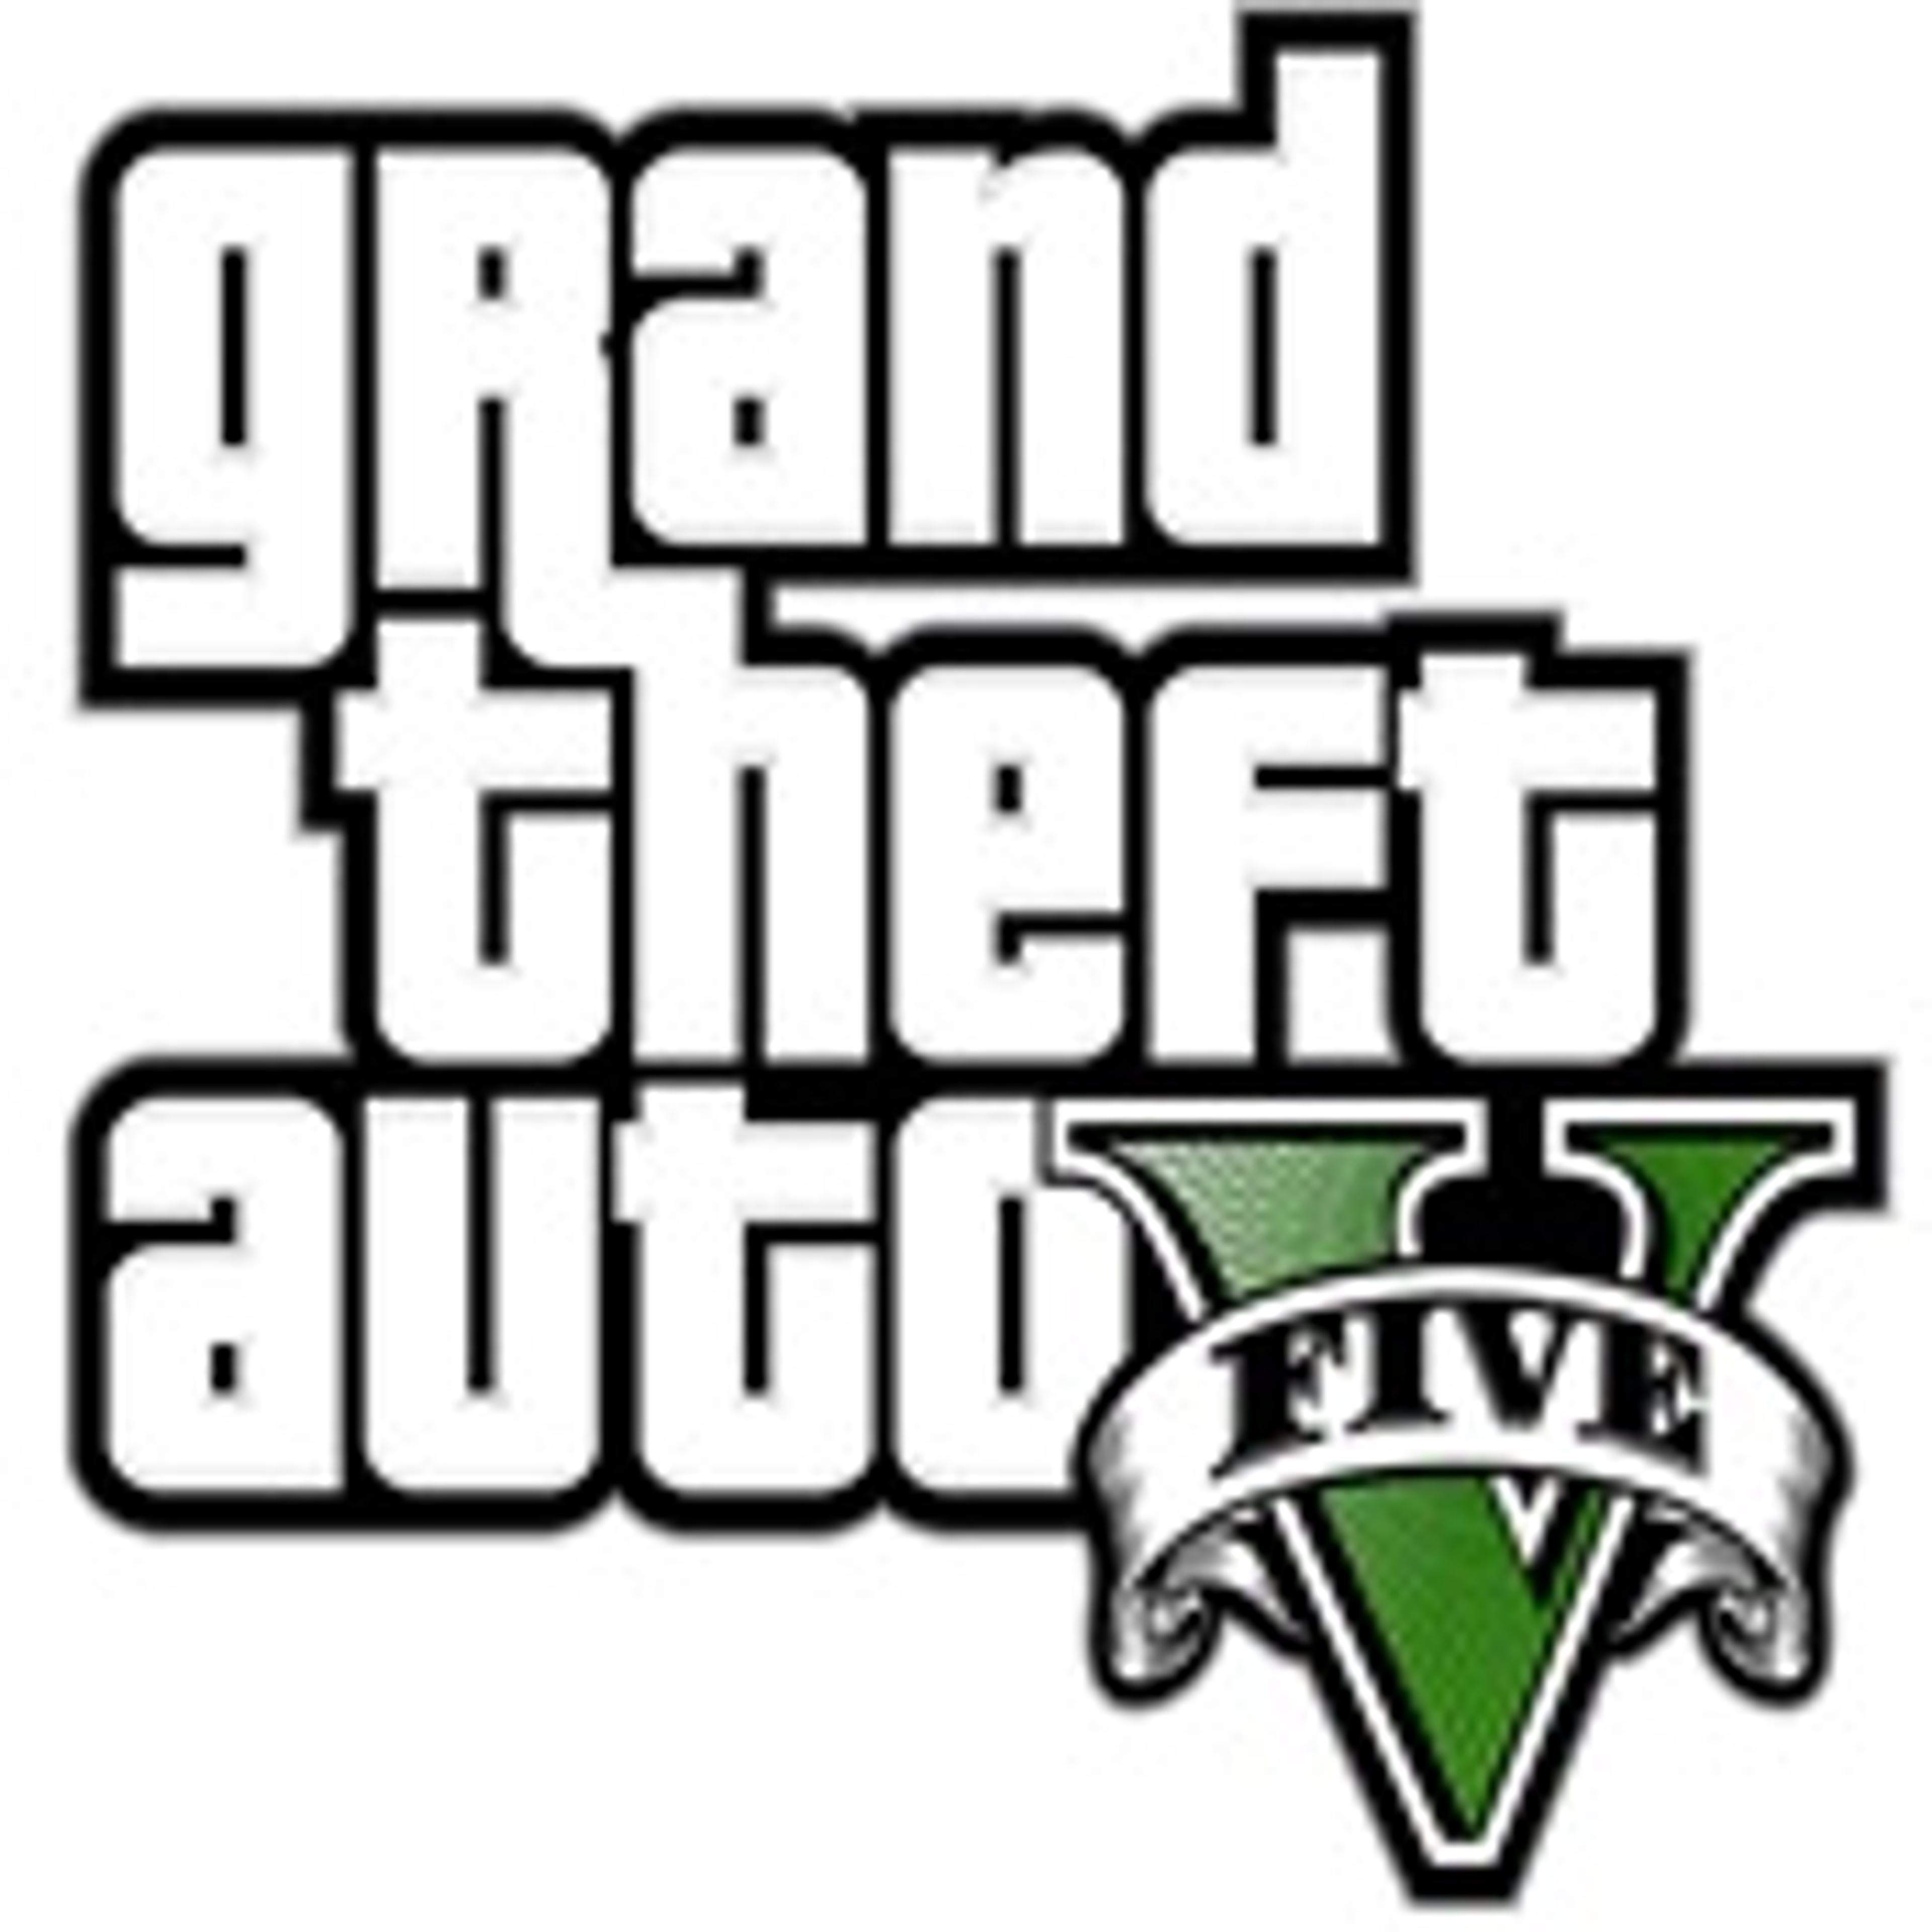 Grand Theft Auto V via Steam Wallet Code